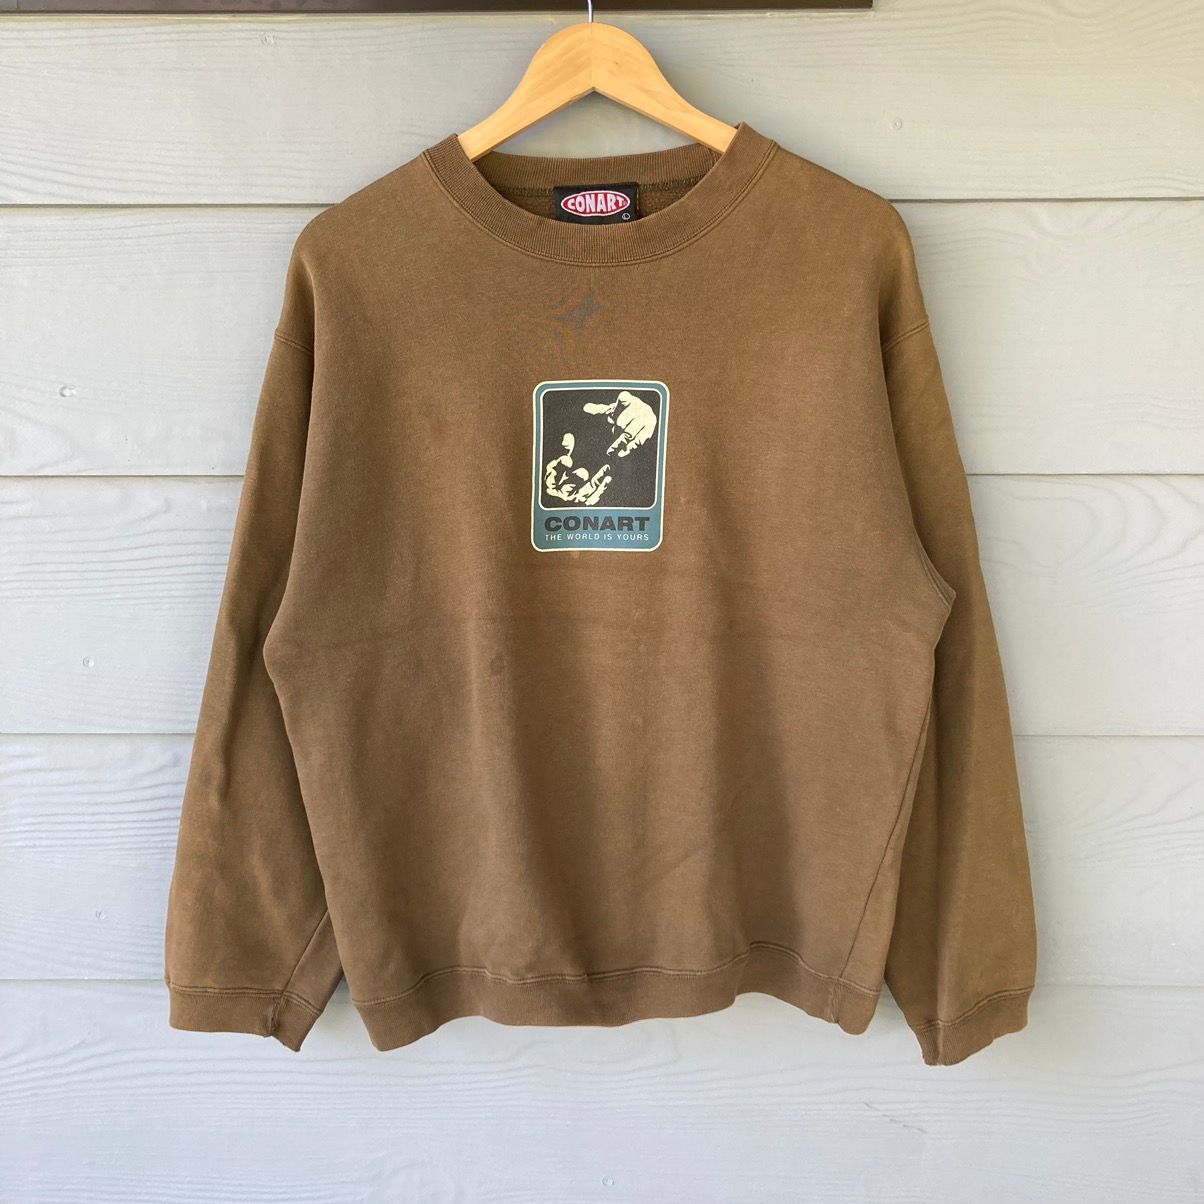 Vintage Conart Sweatshirt Size L - 1